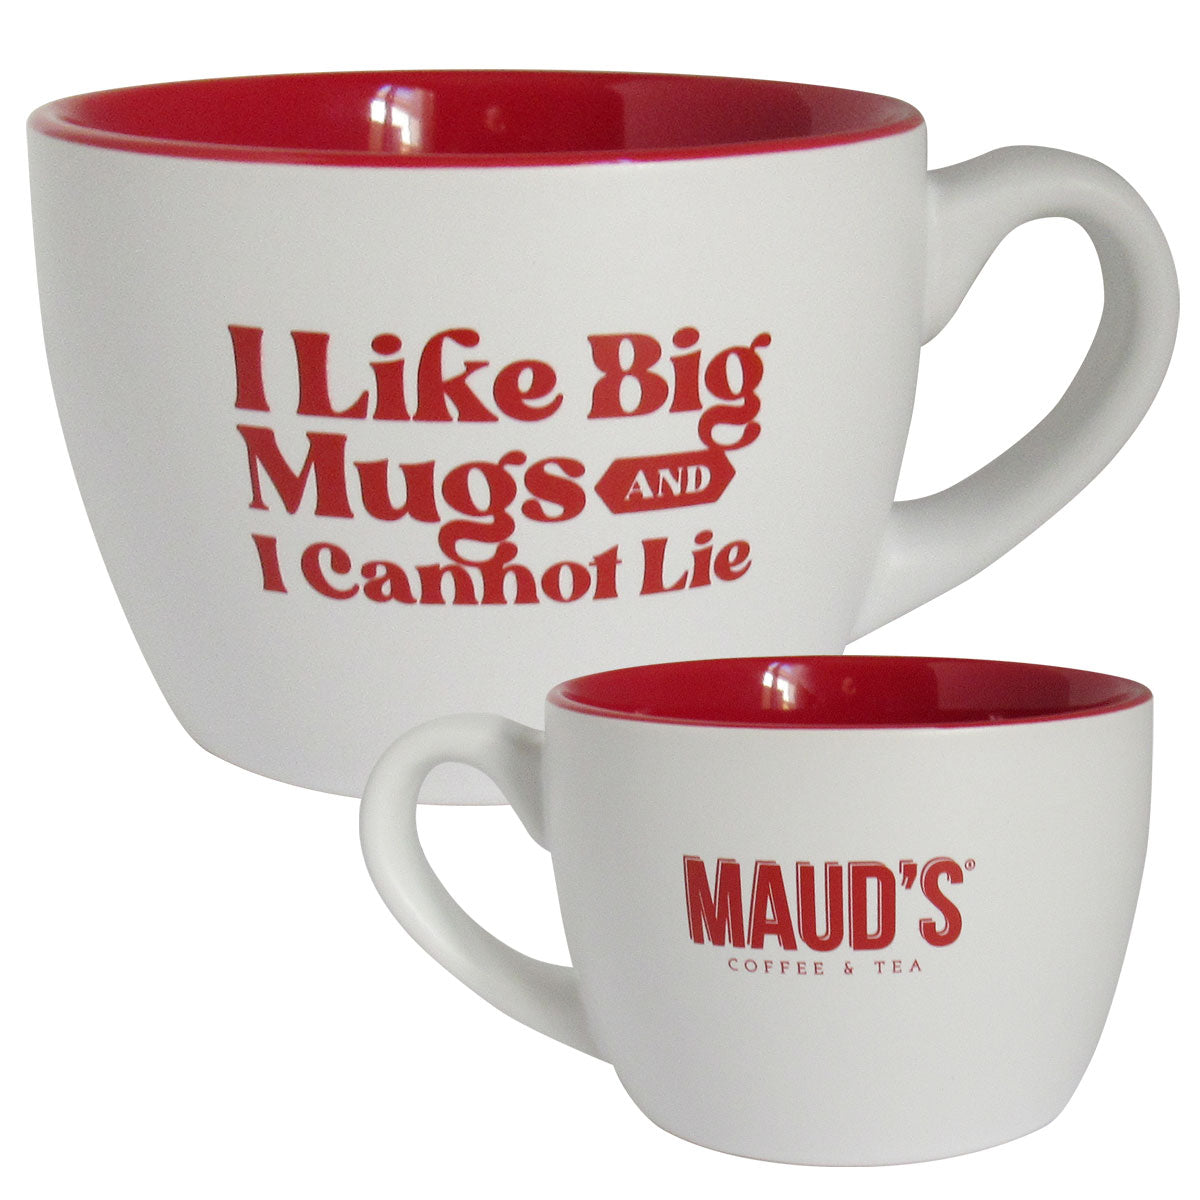 Maud’s “I Like Big Mugs” Mug – 18oz